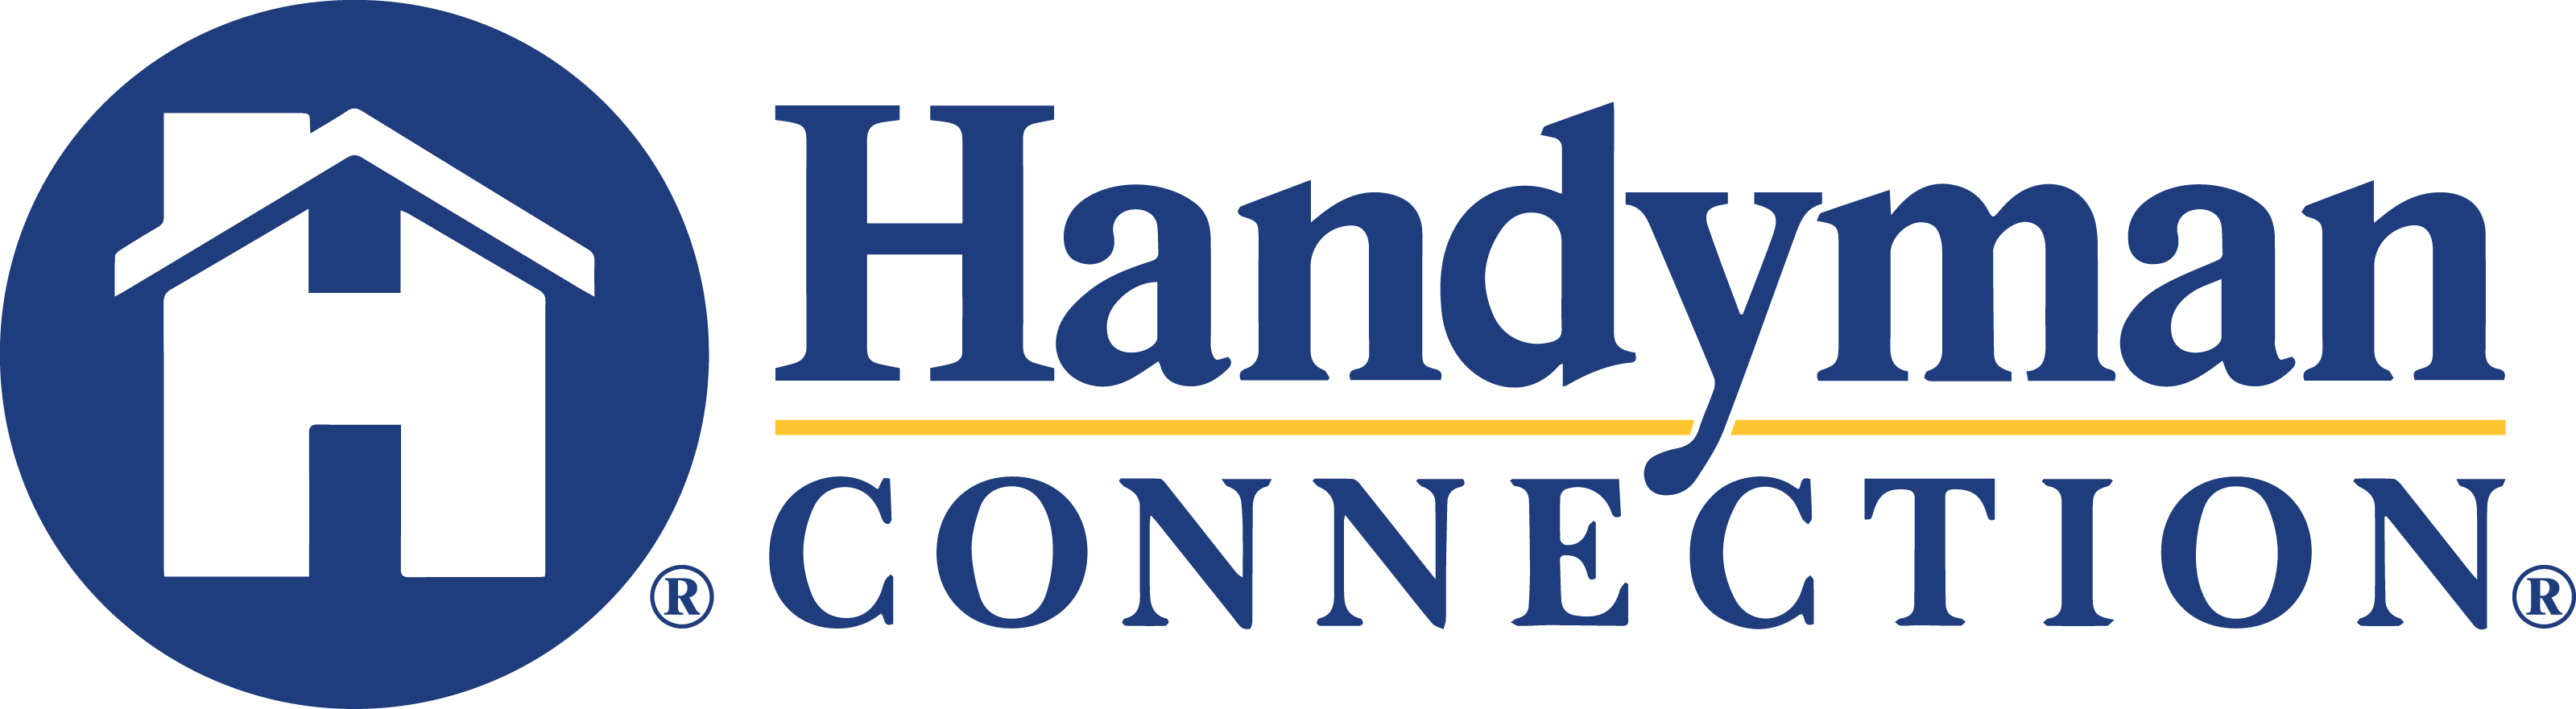 https://handymanconnection.com/matthews/wp-content/uploads/sites/30/2021/05/HandymanConnection-logo-2-1.png